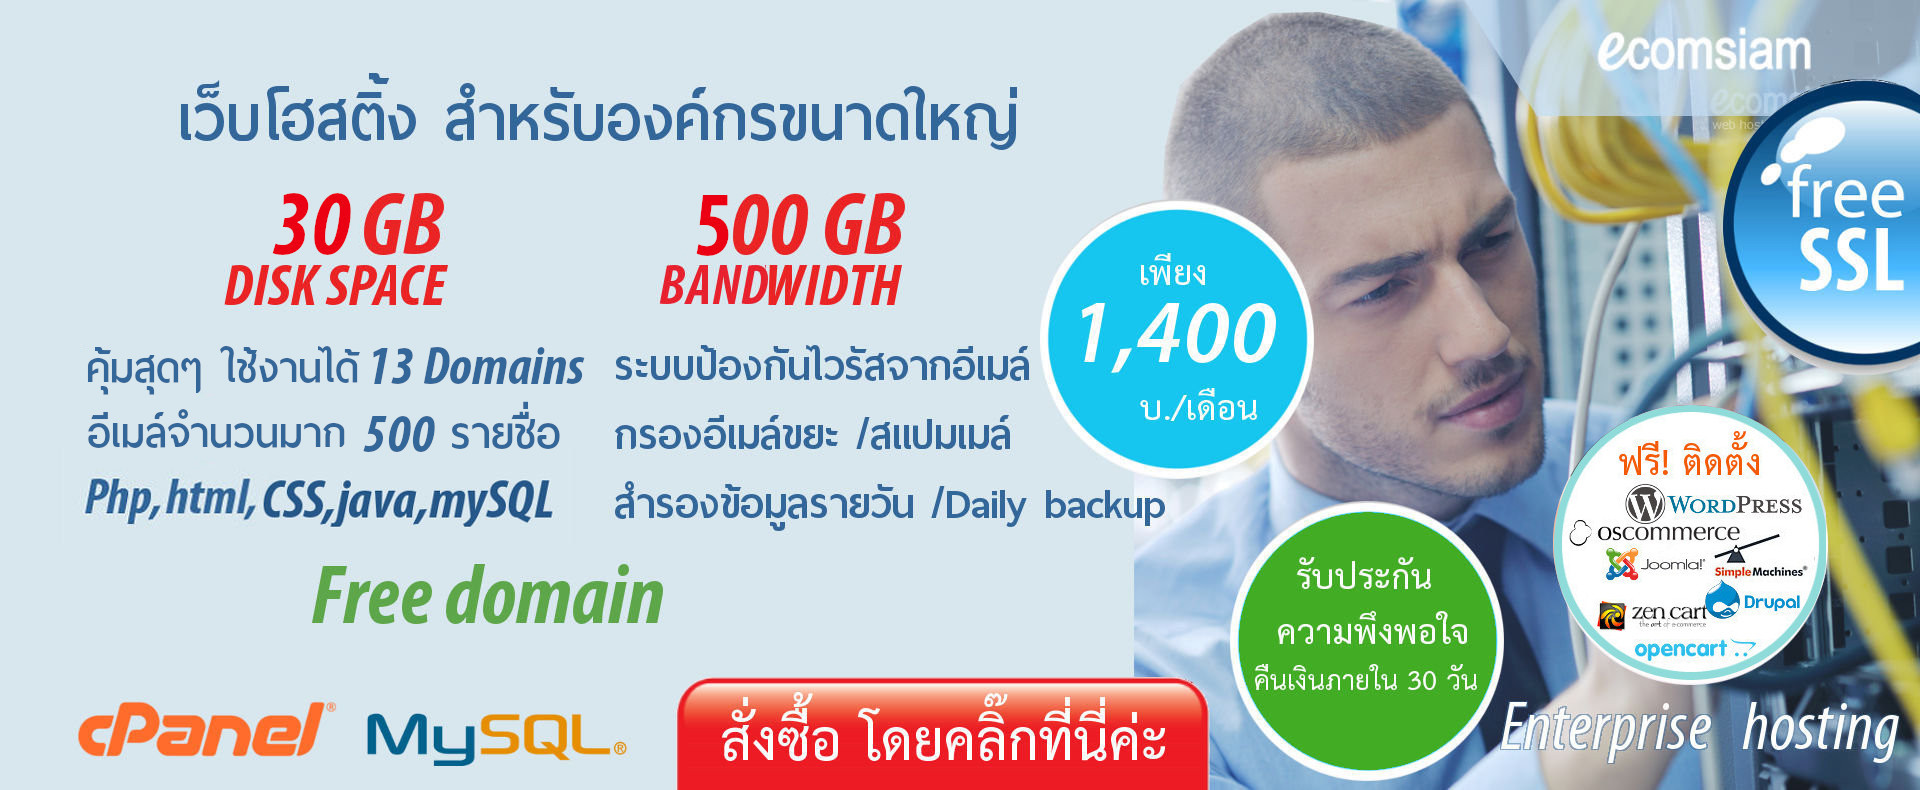 web hosting thai แนะนำ Enterprise web hosting thailand เว็บโฮสต์ติ้งสำหรับองค์กรขนาดใหญ่ Enterprise hosting : เพื่อการใช้งานเว็บไซต์และอีเมล์จำนวนมาก ราคาเพียง 1,400 บ./เดือน เว็บโฮสติ้งไทย ฟรี โดเมน ฟรี SSL ฟรีติดตั้ง แนะนำเว็บโฮสติ้ง บริการลูกค้า  Support ดูแลดี โดย webhosting.com.co.th - enterprise web hosting thailand free domain